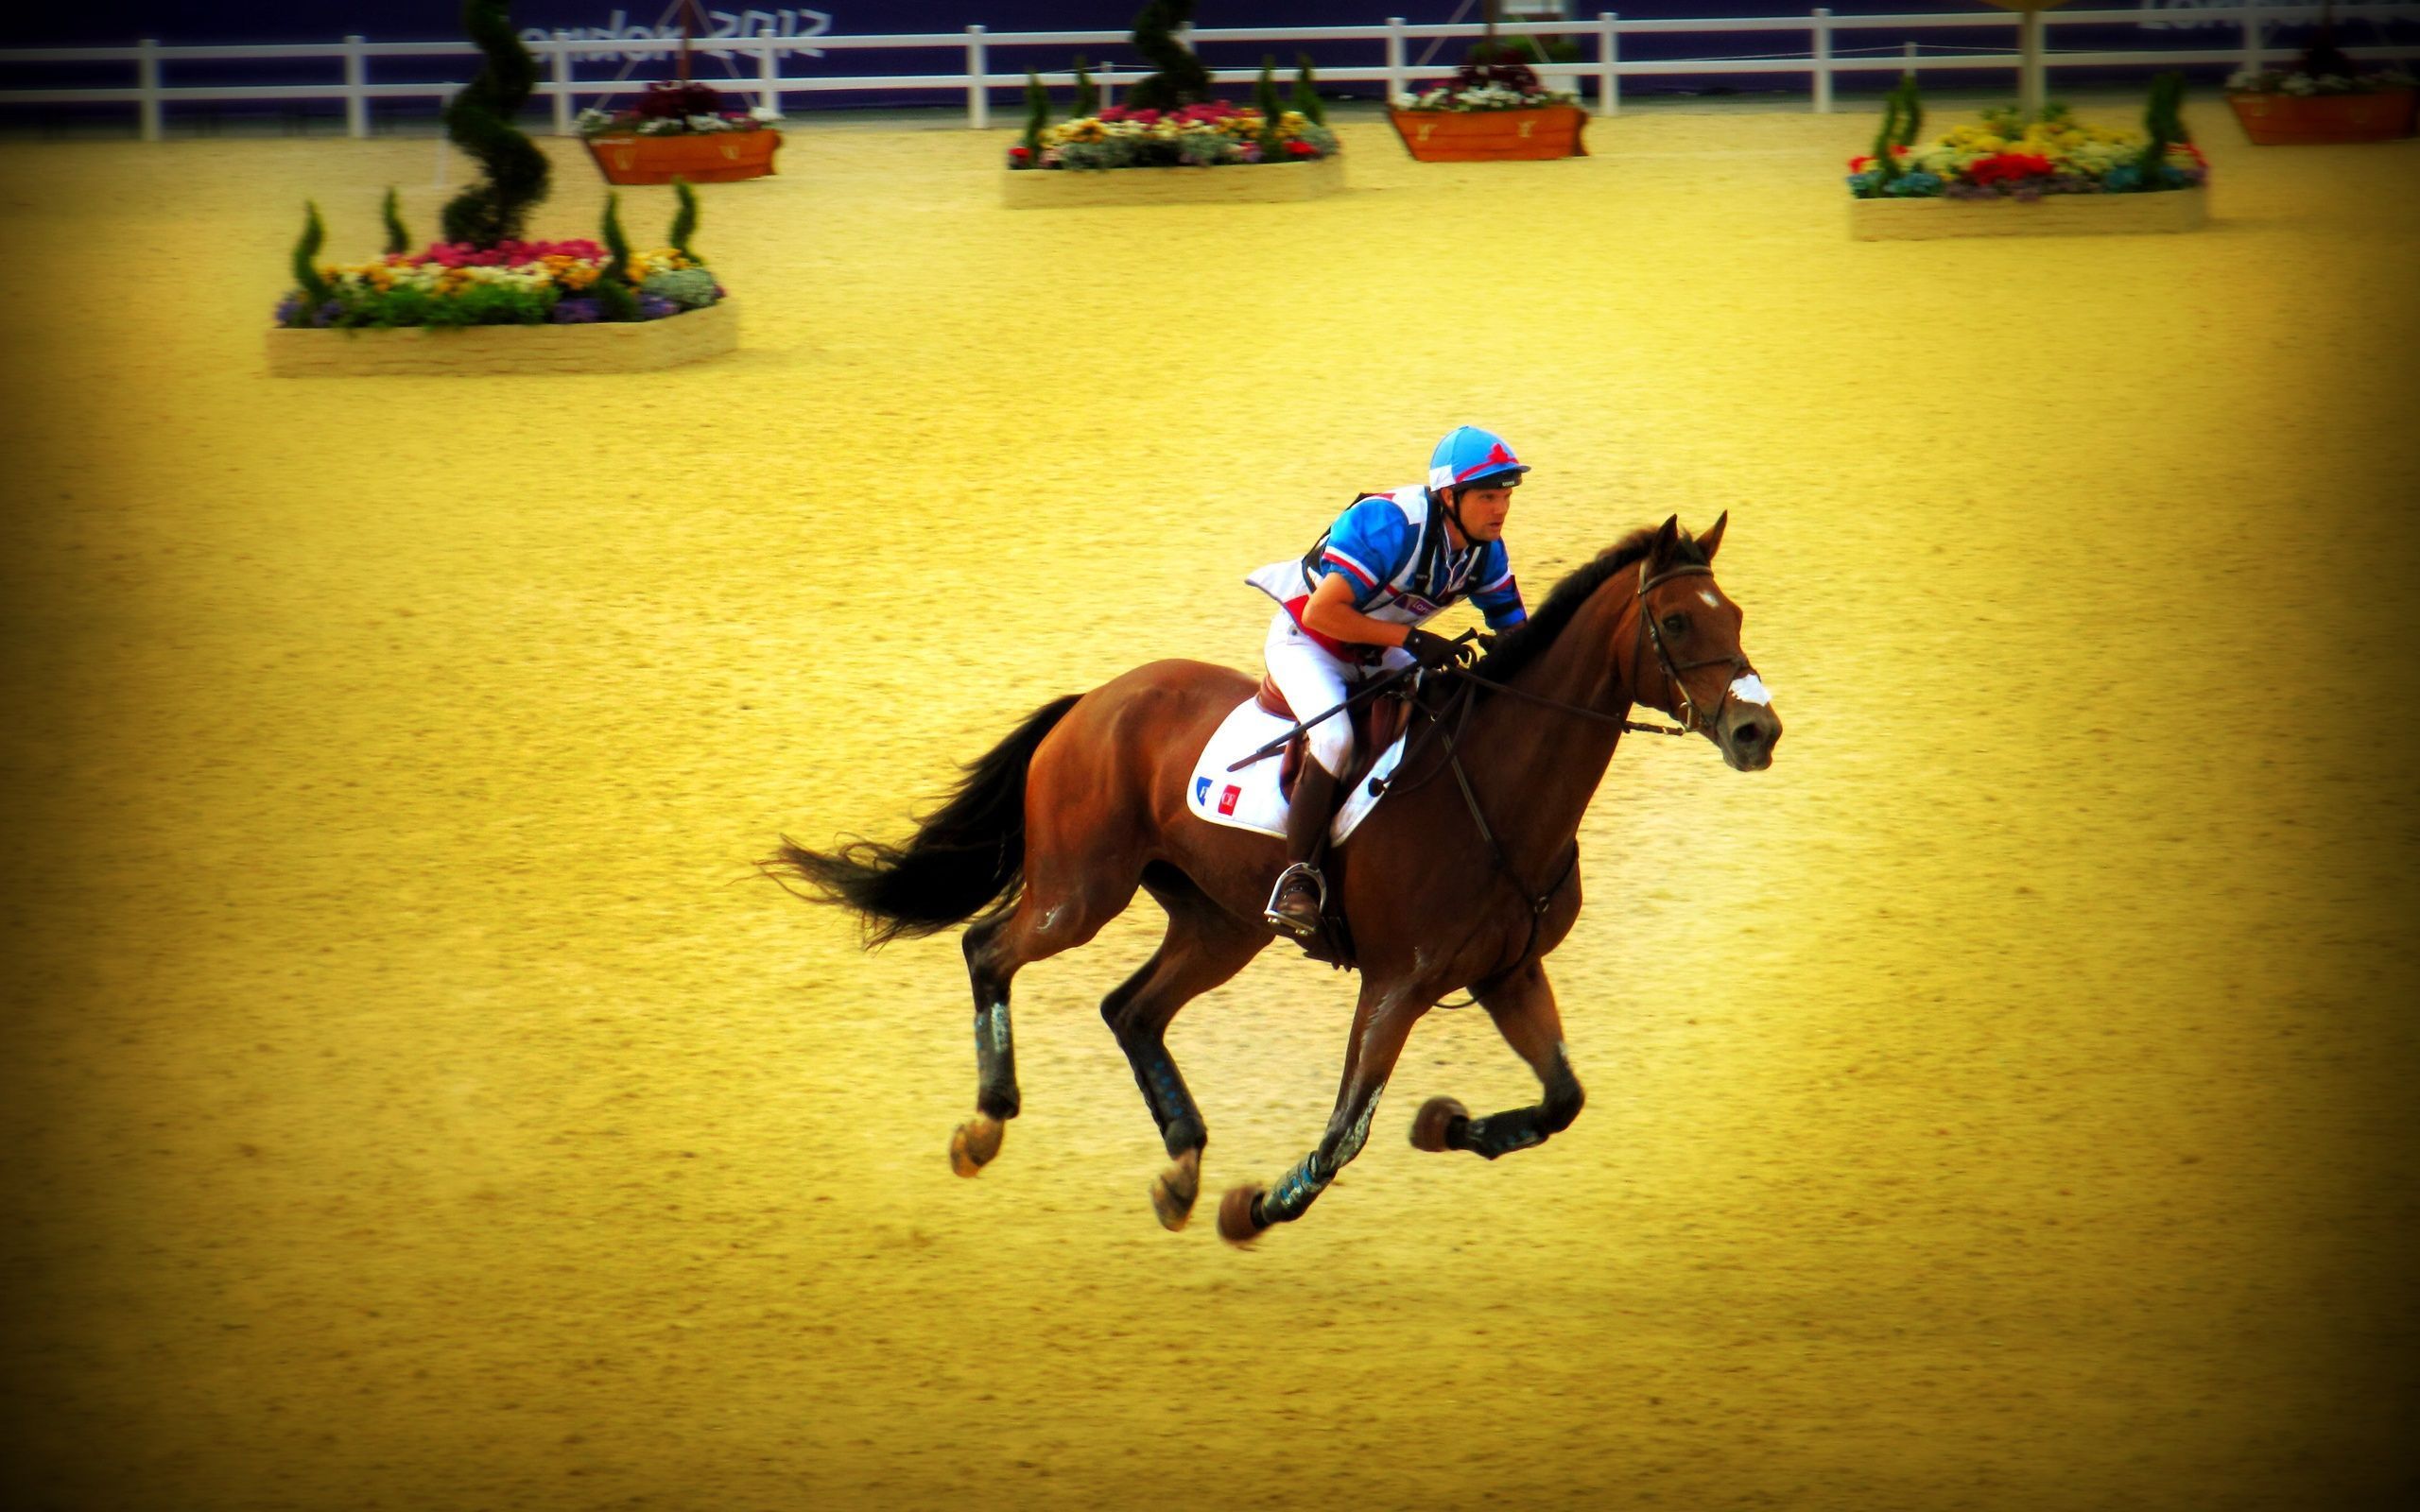 Horse Riding Sport Photo and Desktop Wallpaper